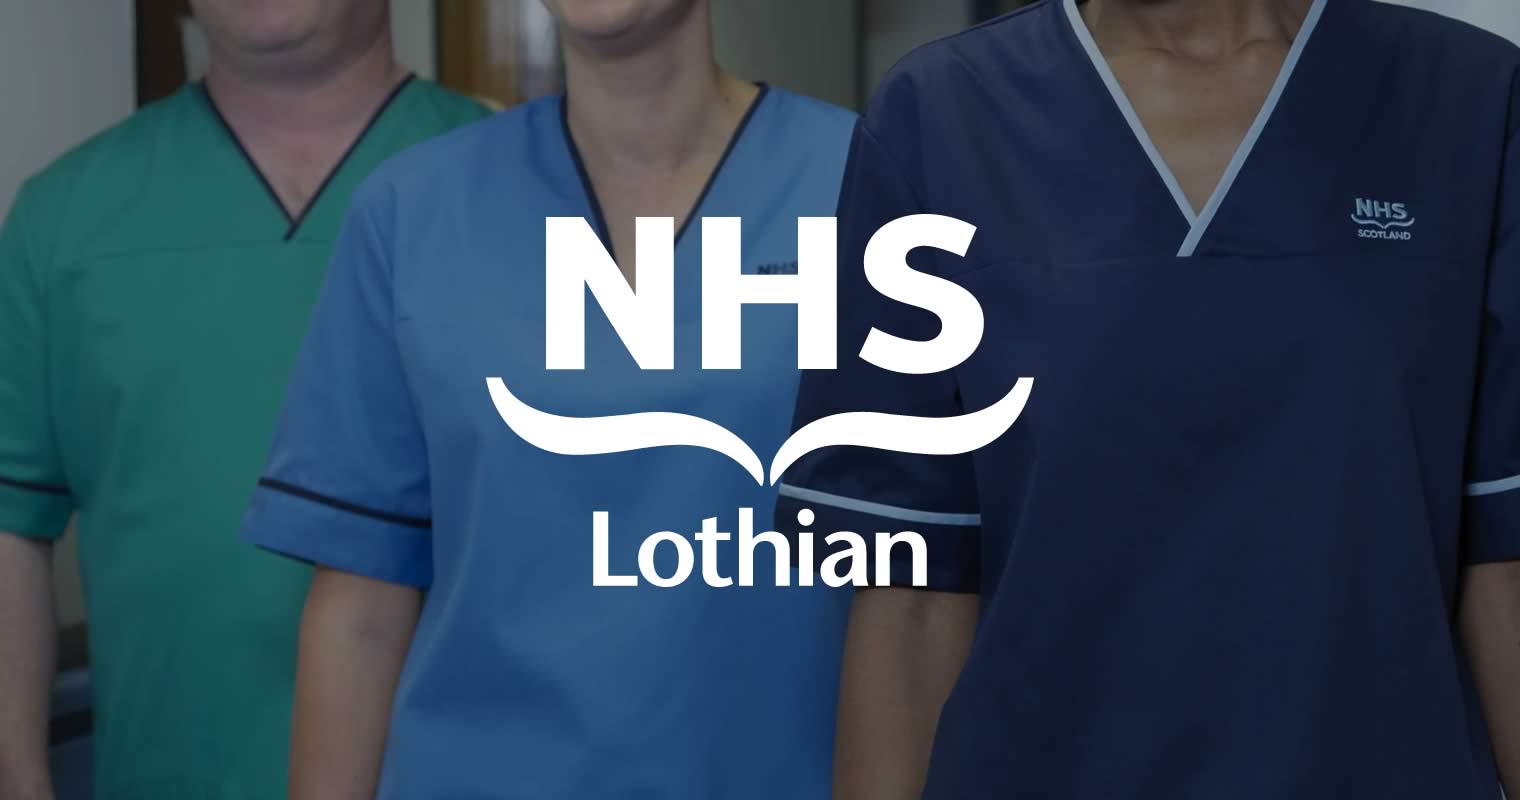 NHS Lothian staff wearing NHS uniforms